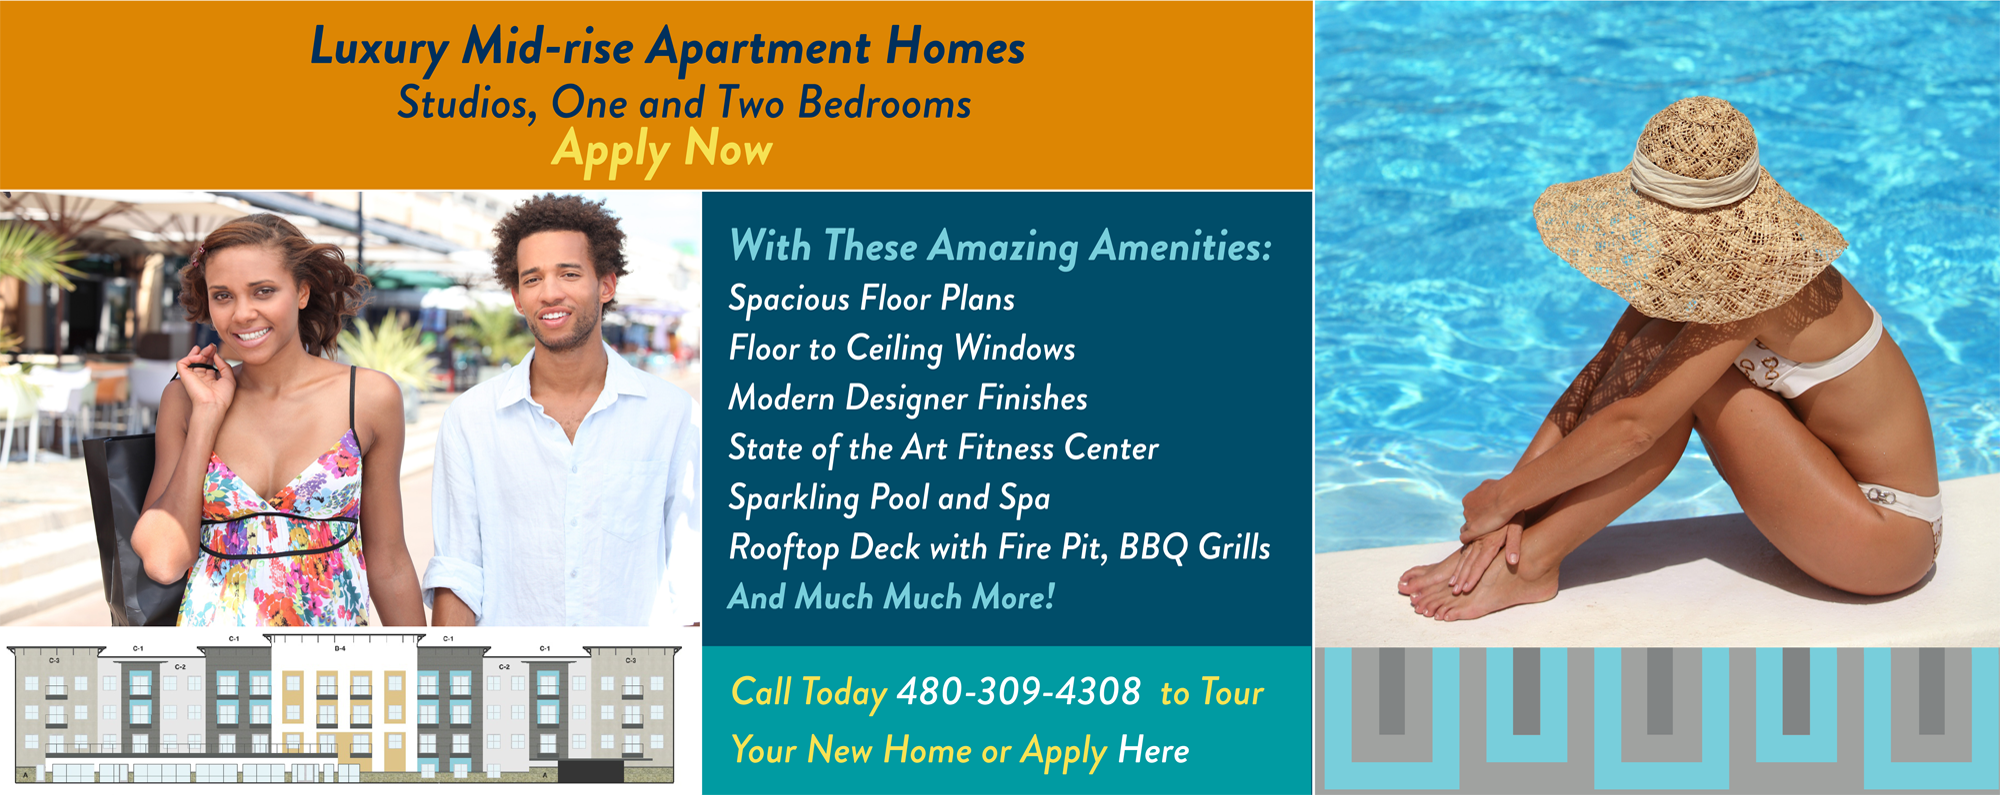 pure midtown apartments luxury apartment homes phoenix az arizona calibrate property management